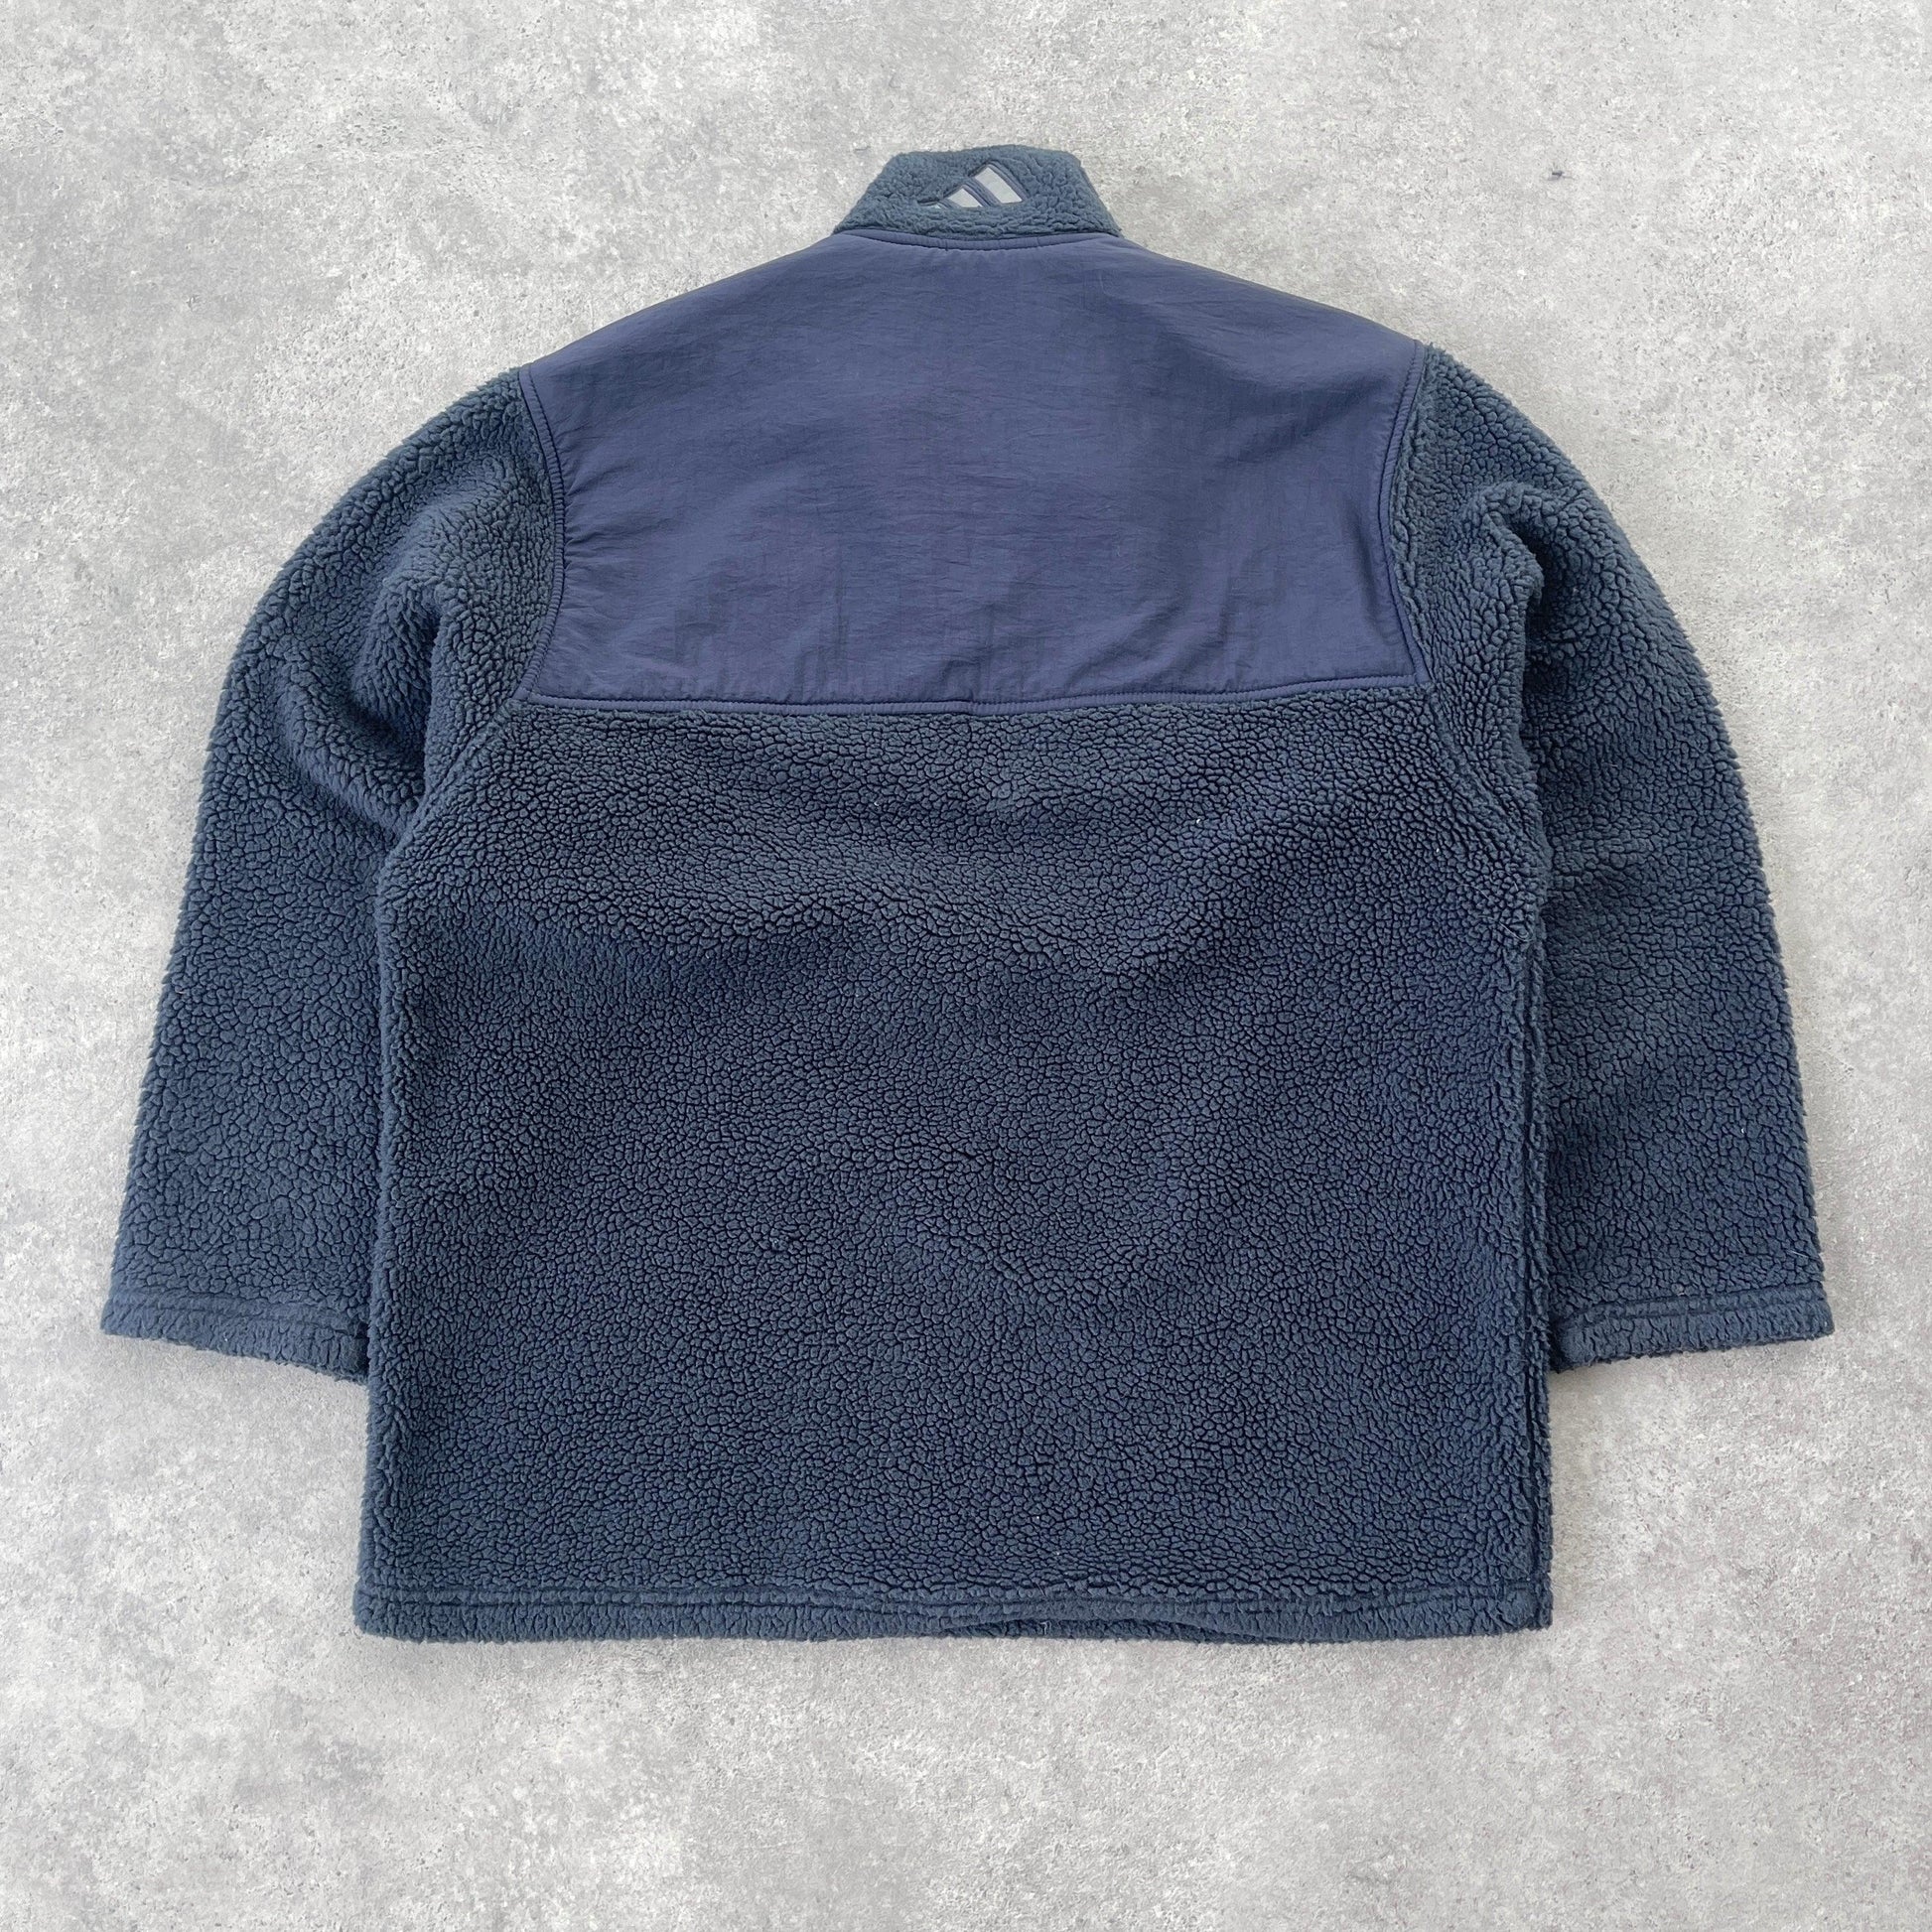 Adidas 1999 deep pile sherpa fleece jacket (M) - Known Source